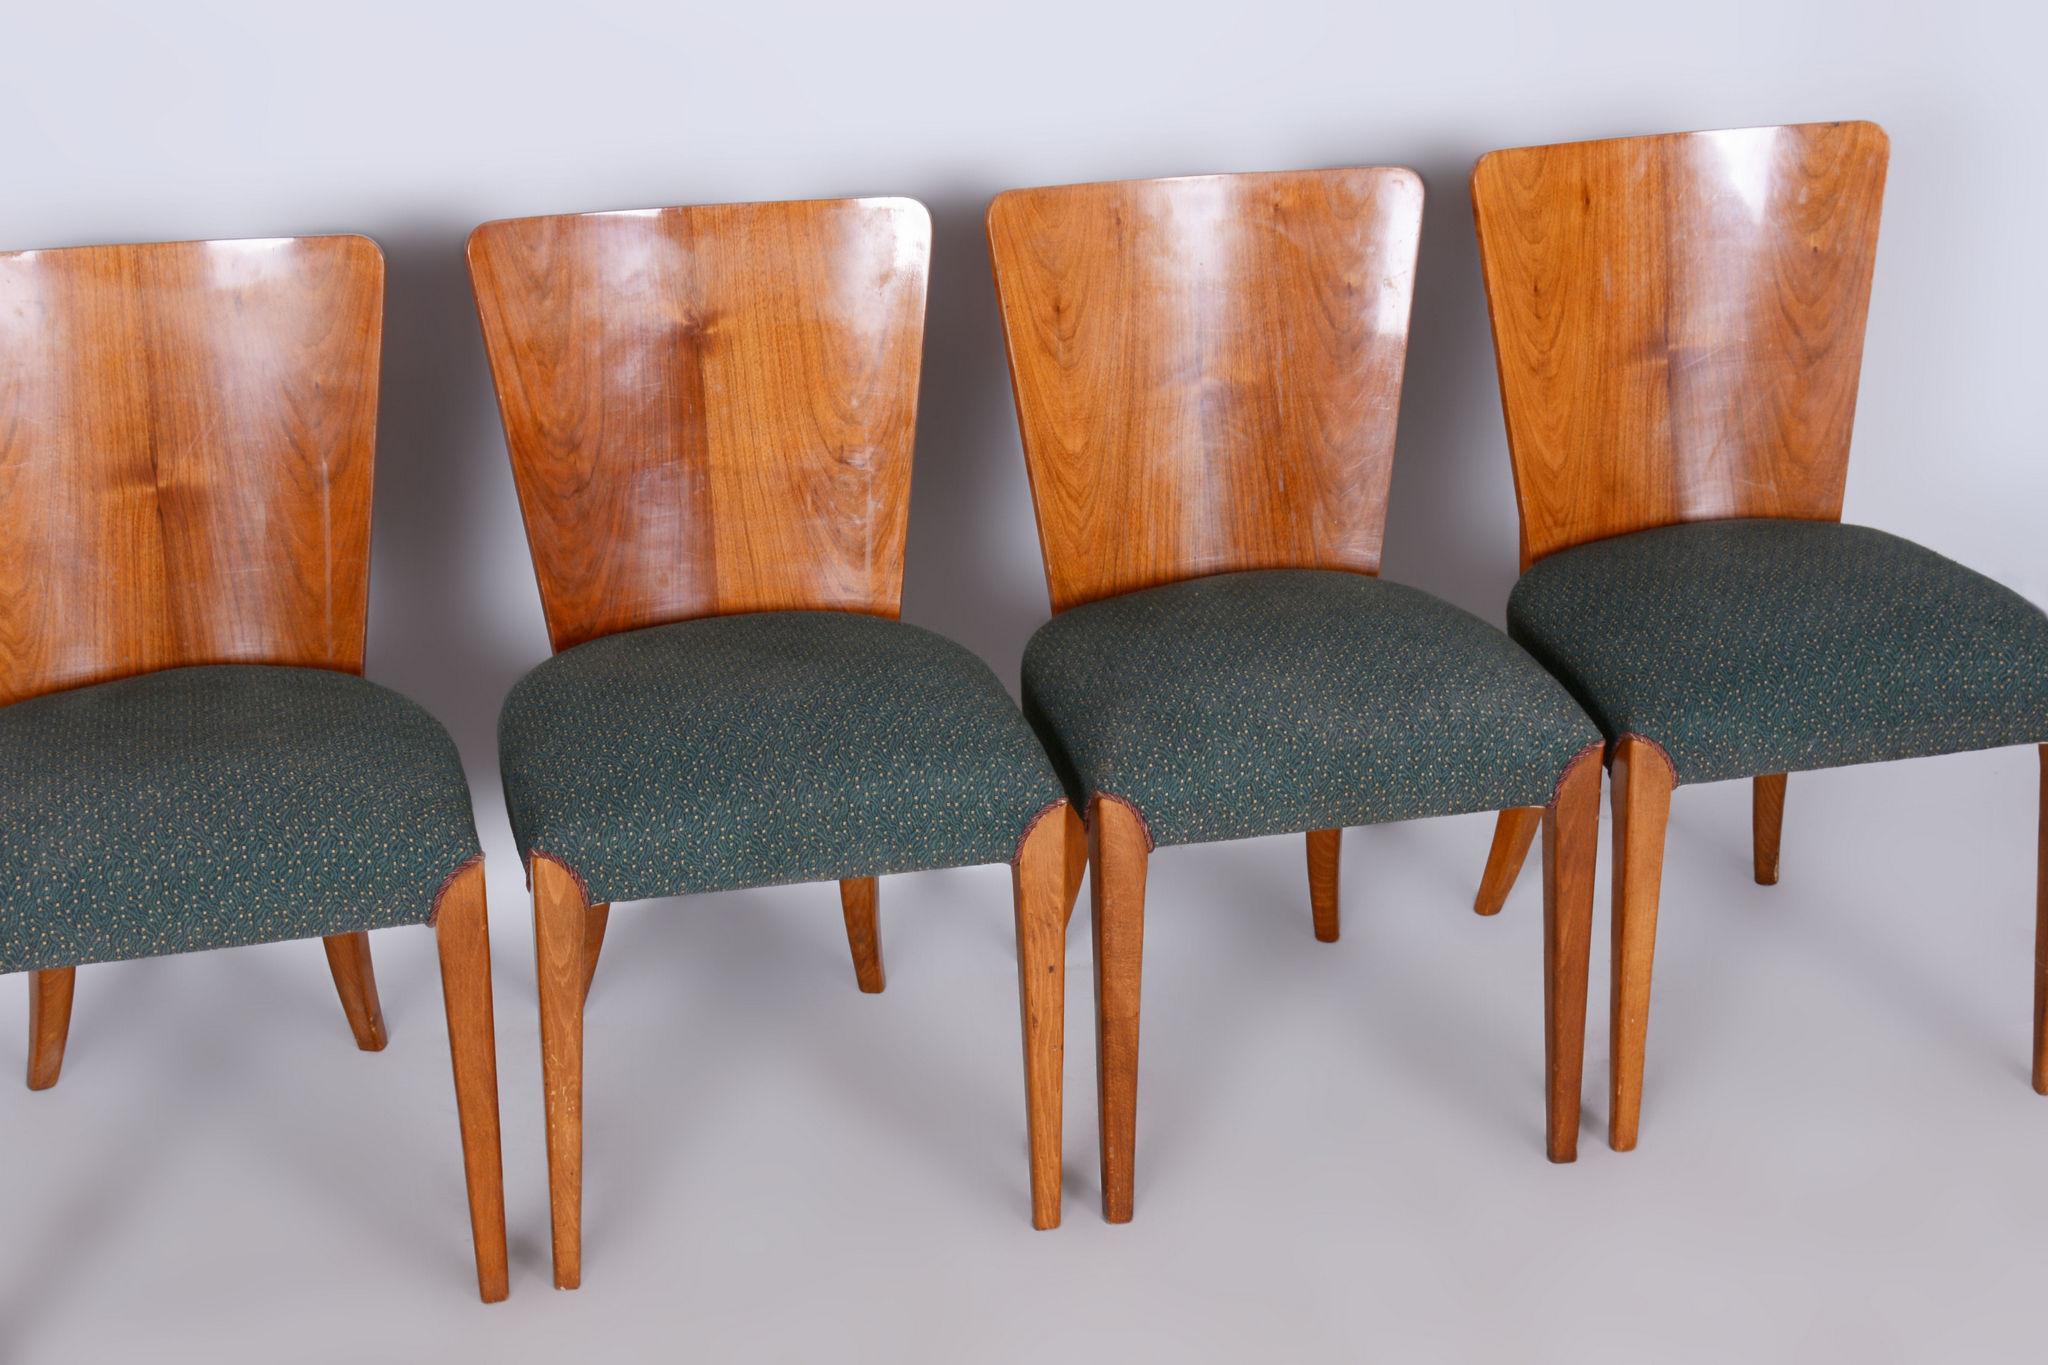 Set of Four Original ArtDeco Chairs, Halabala, UP Zavody, Beech, Czechia, 1940s For Sale 3